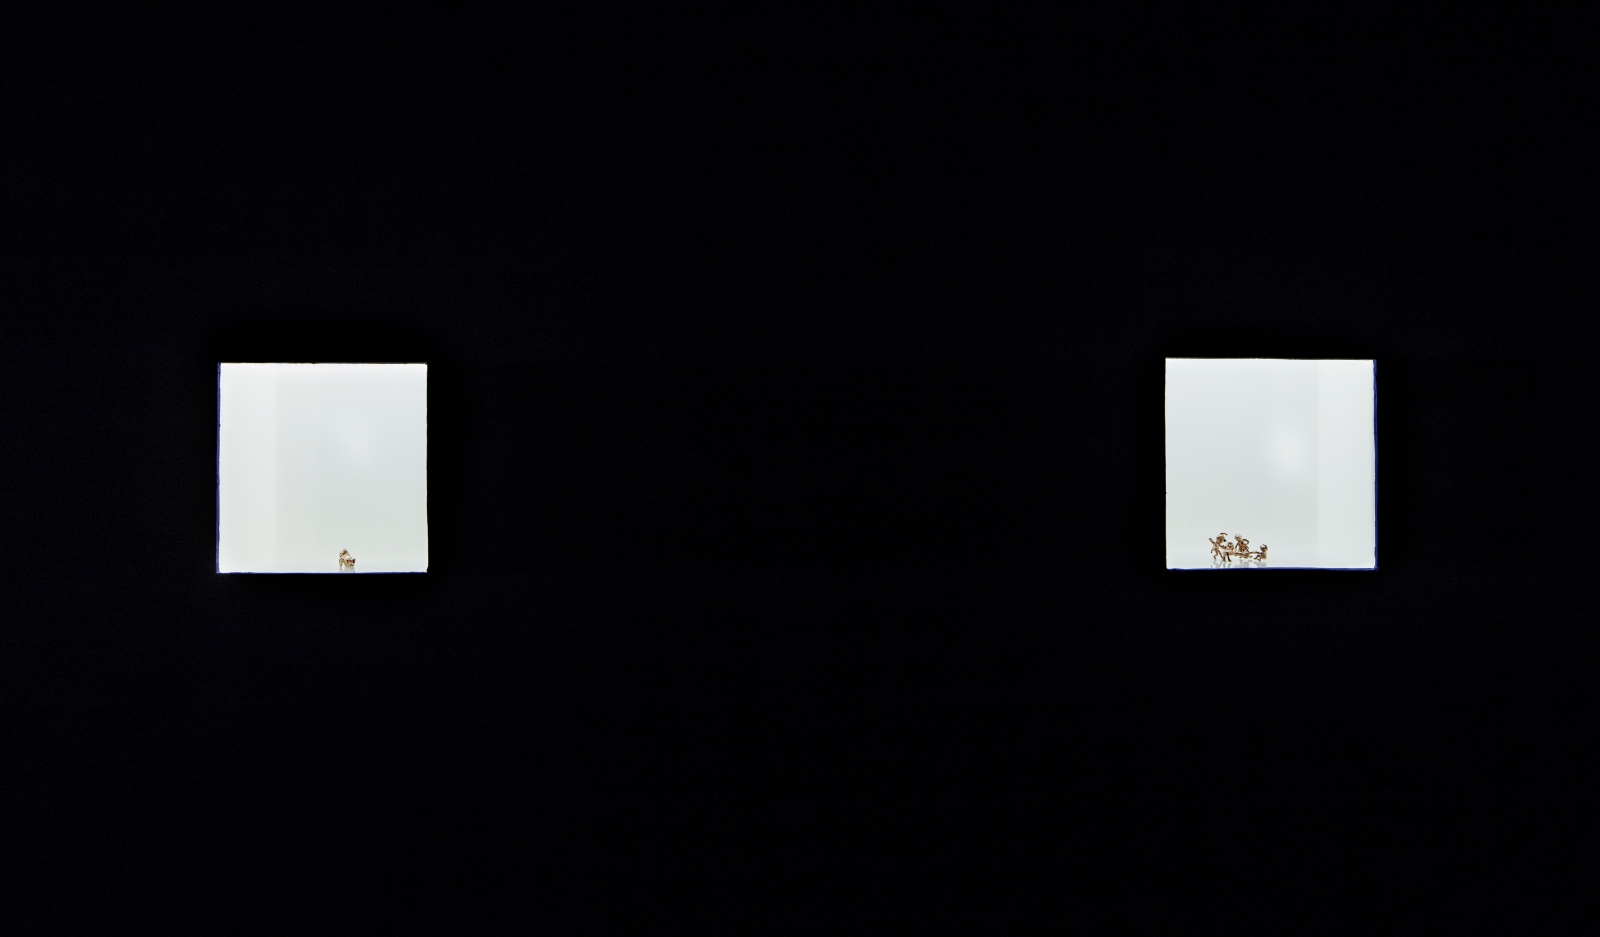 Carlos Motta
Towards a Homoerotic Historiography, 2014 (installation view)
tumbaga washed silver
dimensions variable&amp;nbsp;